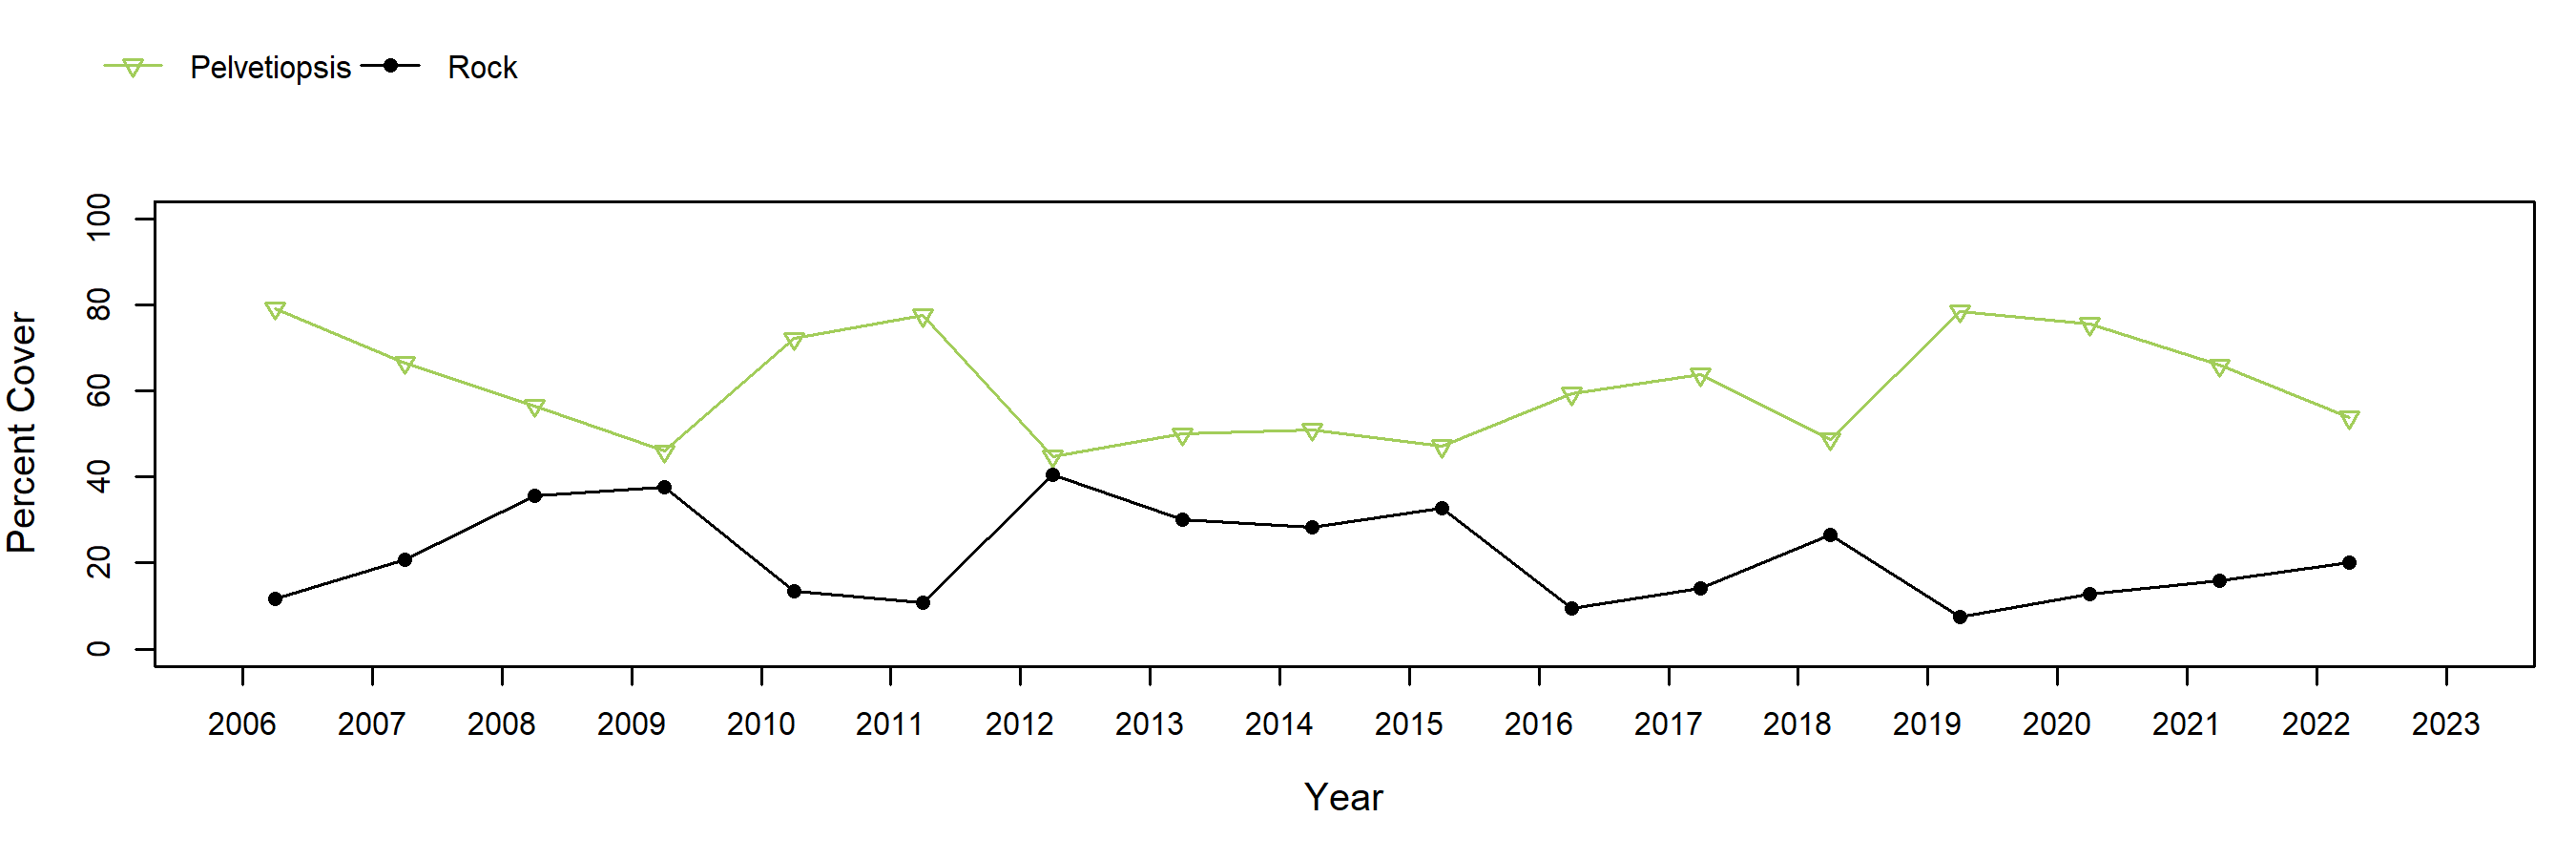 Santa Maria Creek Pelvetiopsis trend plot